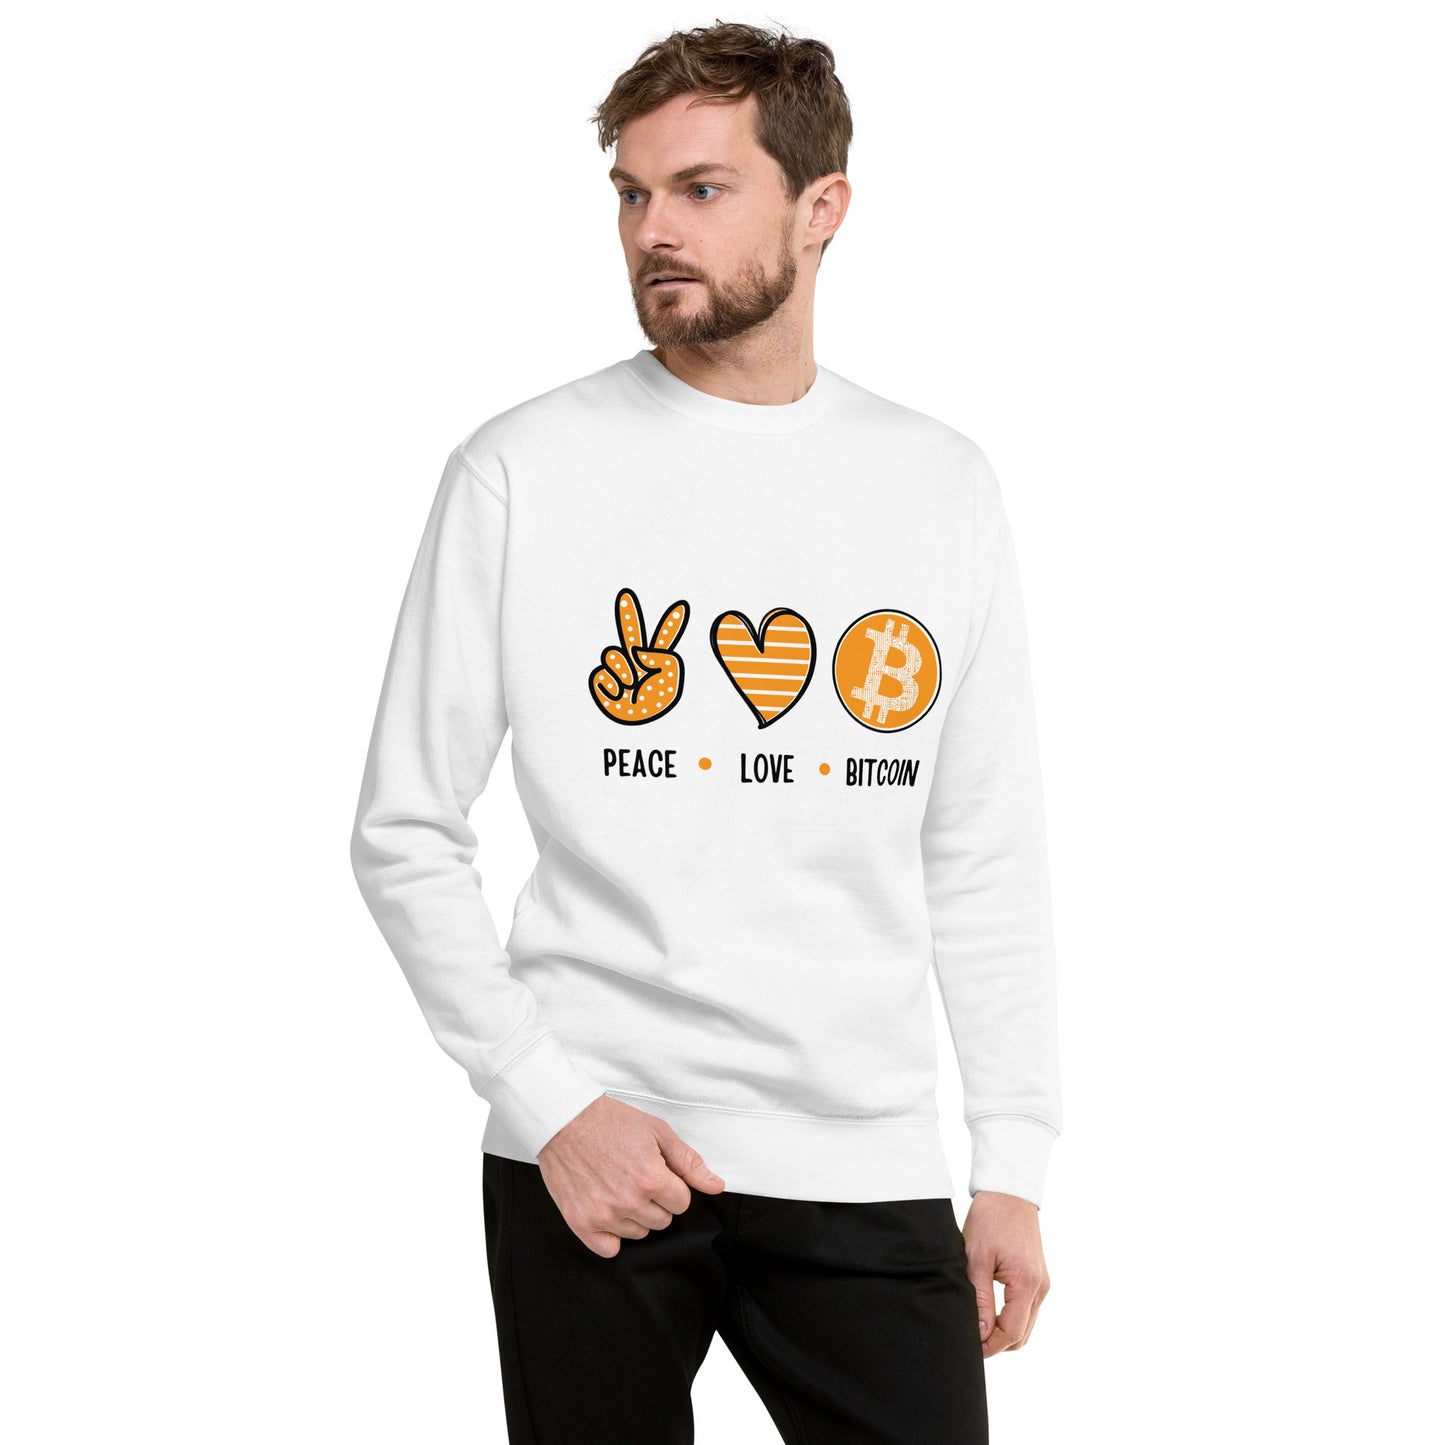 Peace, Love, Bitcoin Unisex Premium Sweatshirt